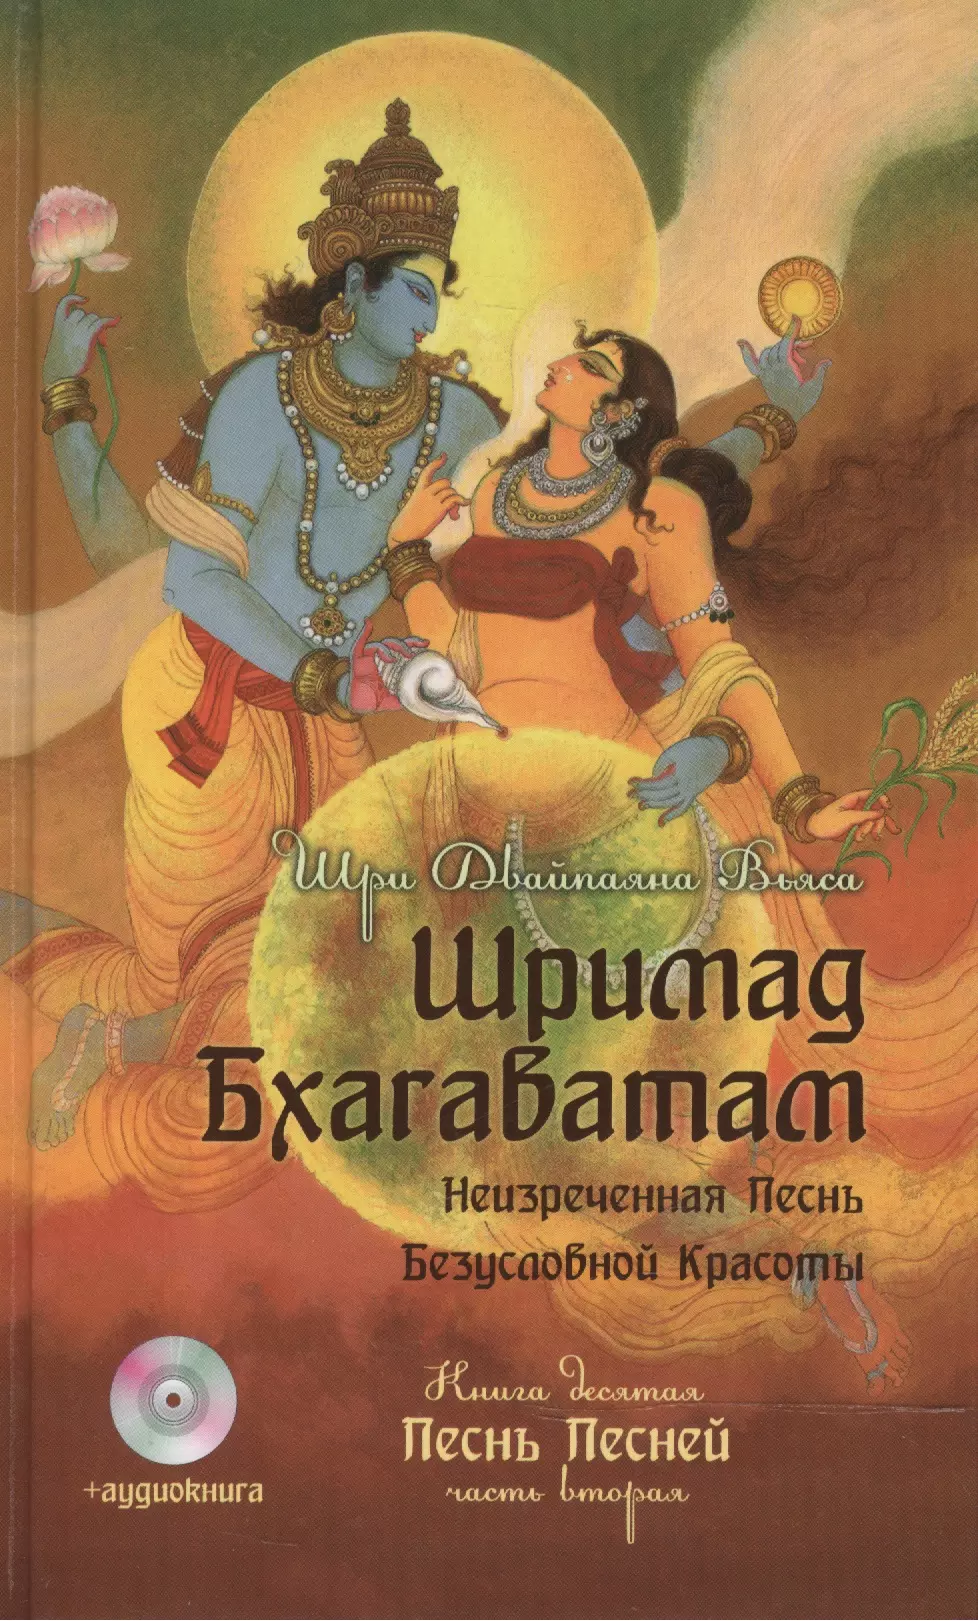 Двайпаяна Вьяса Шри Шримад Бхагаватам. Кн. 10. Часть 2 + CD MP3 диск